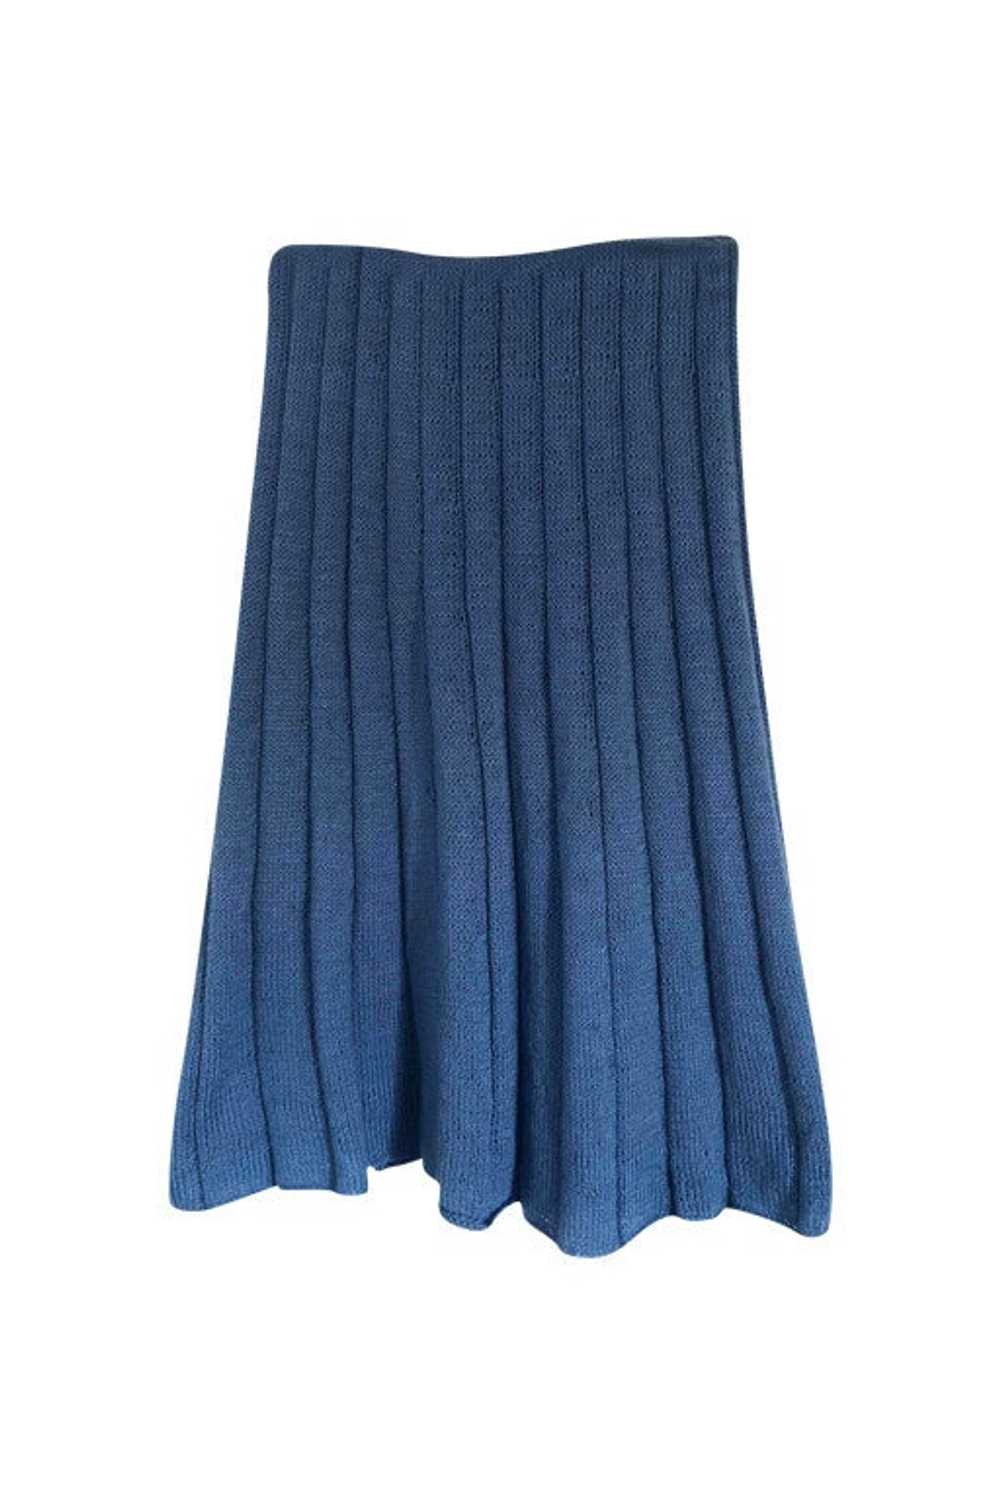 Knit skirt - image 1